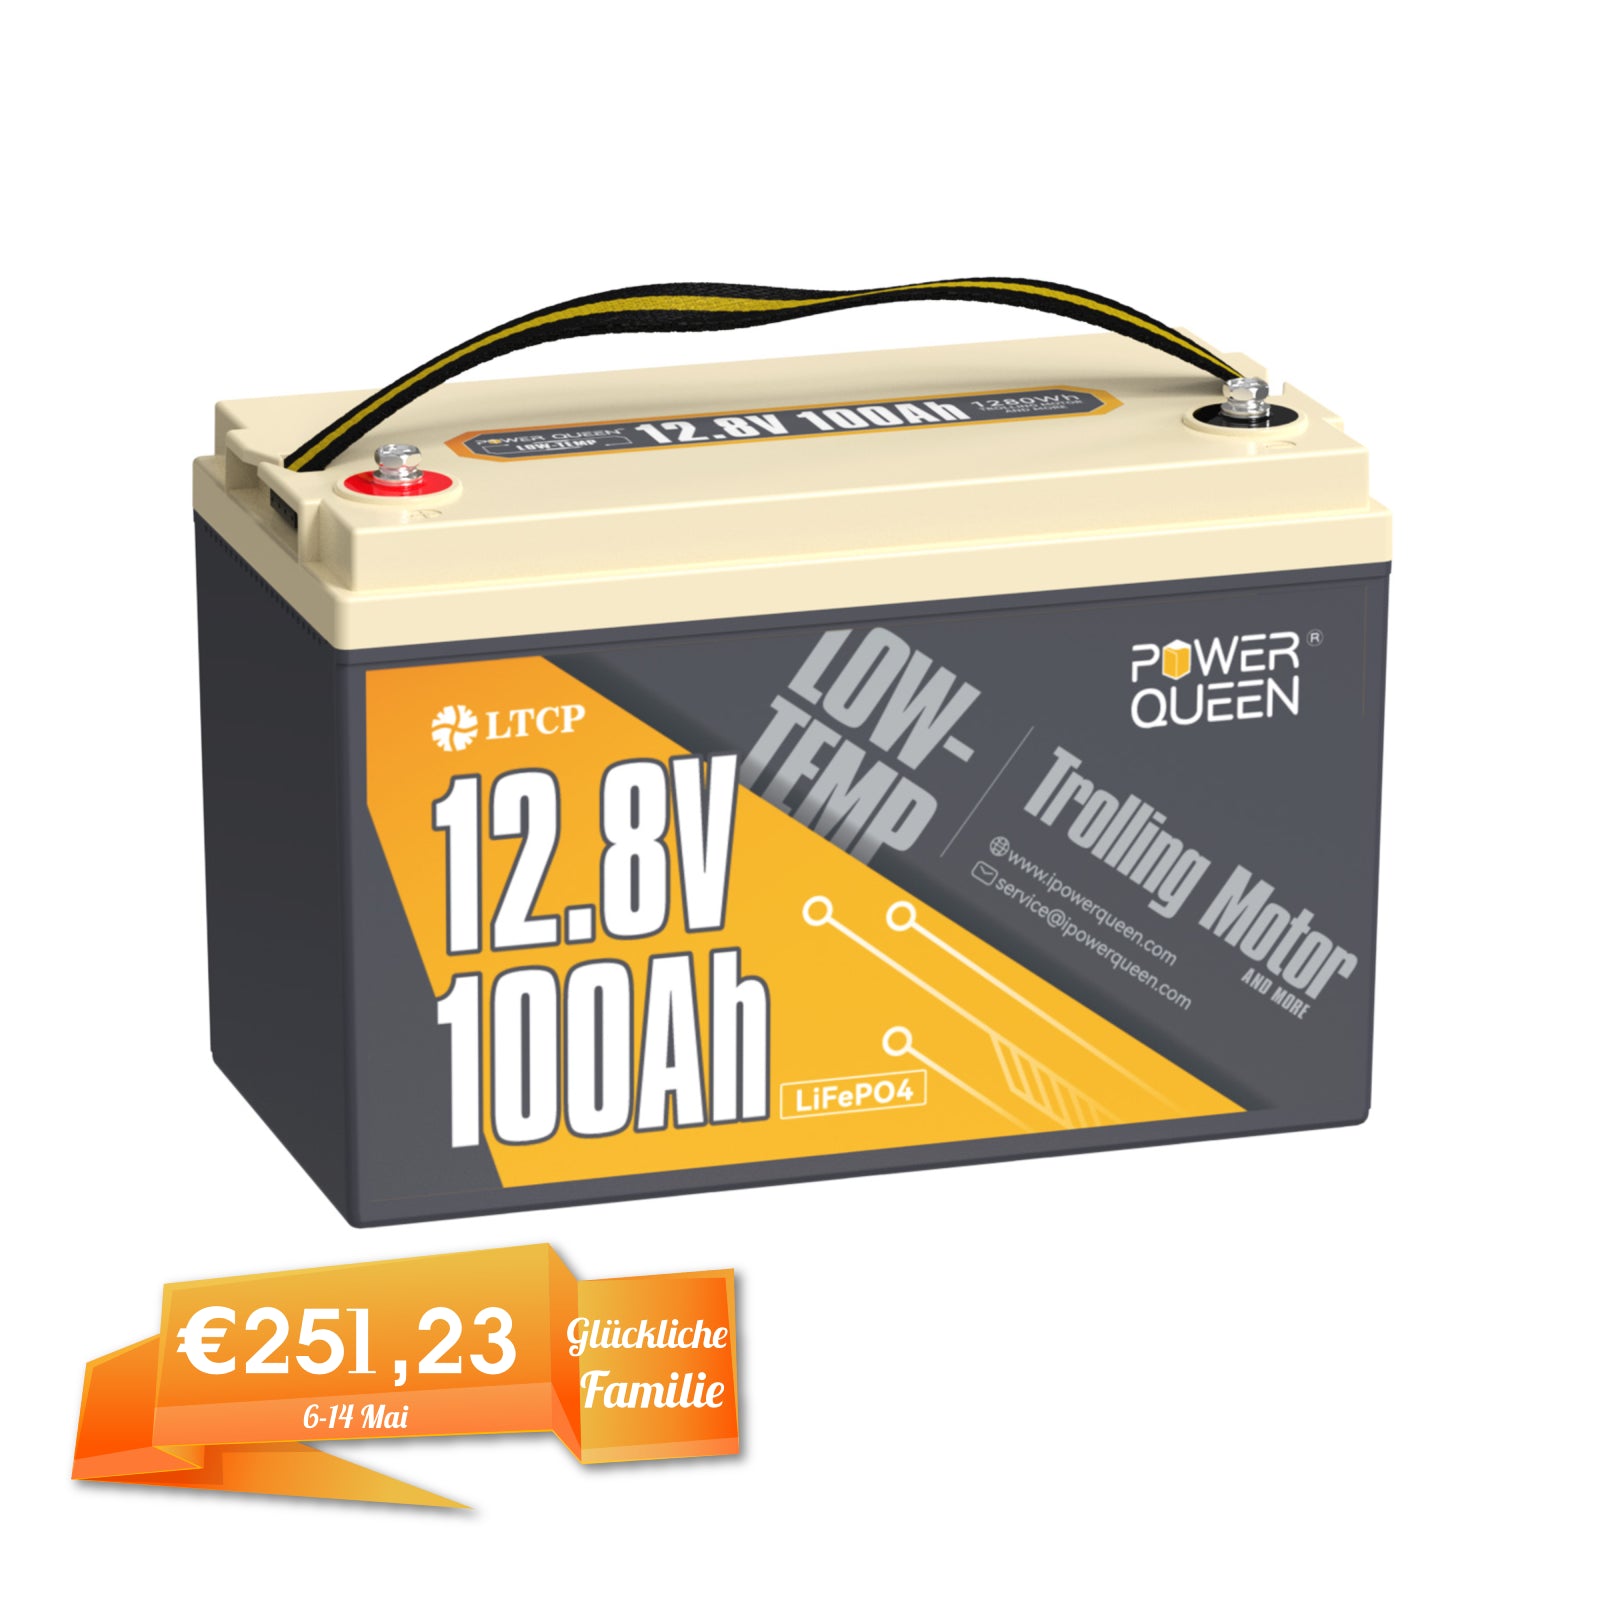 【0% IVA】Batería LiFePO4 de baja temperatura Power Queen 12V 100Ah con 100A BMS